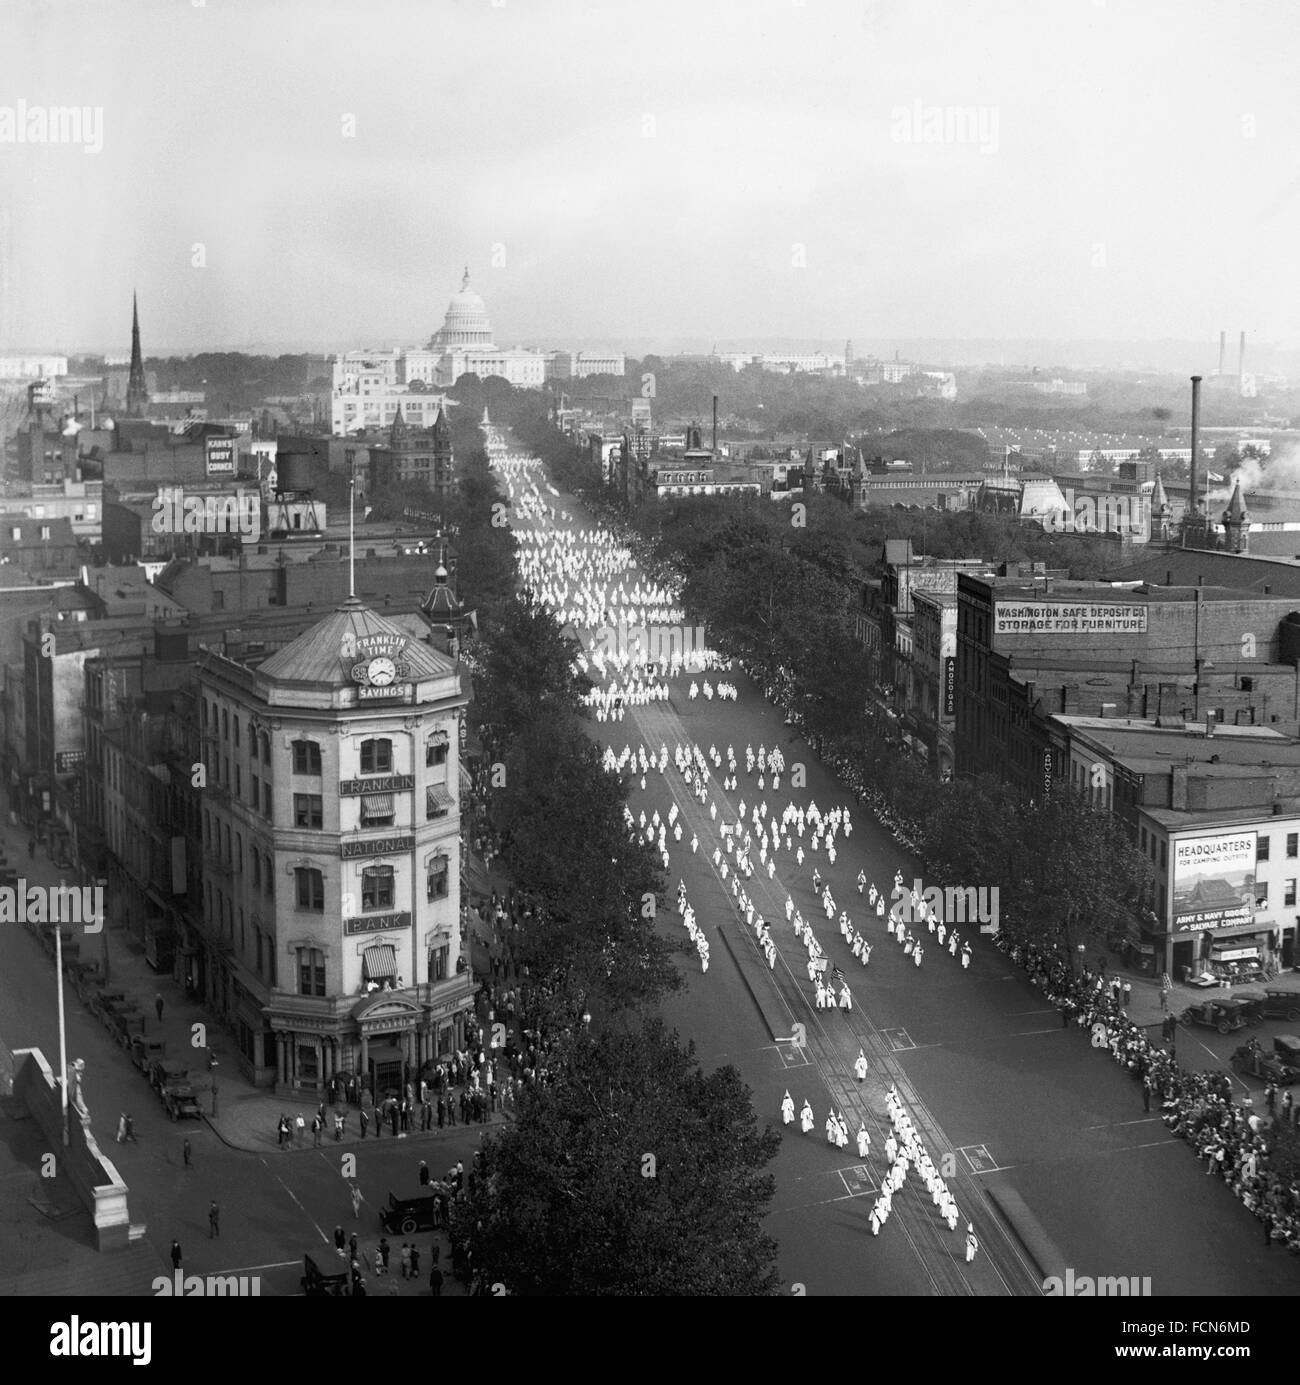 Ku Klux Klan marching down Pennsylvania Avenue in Washington DC on 13th September 1926 Stock Photo